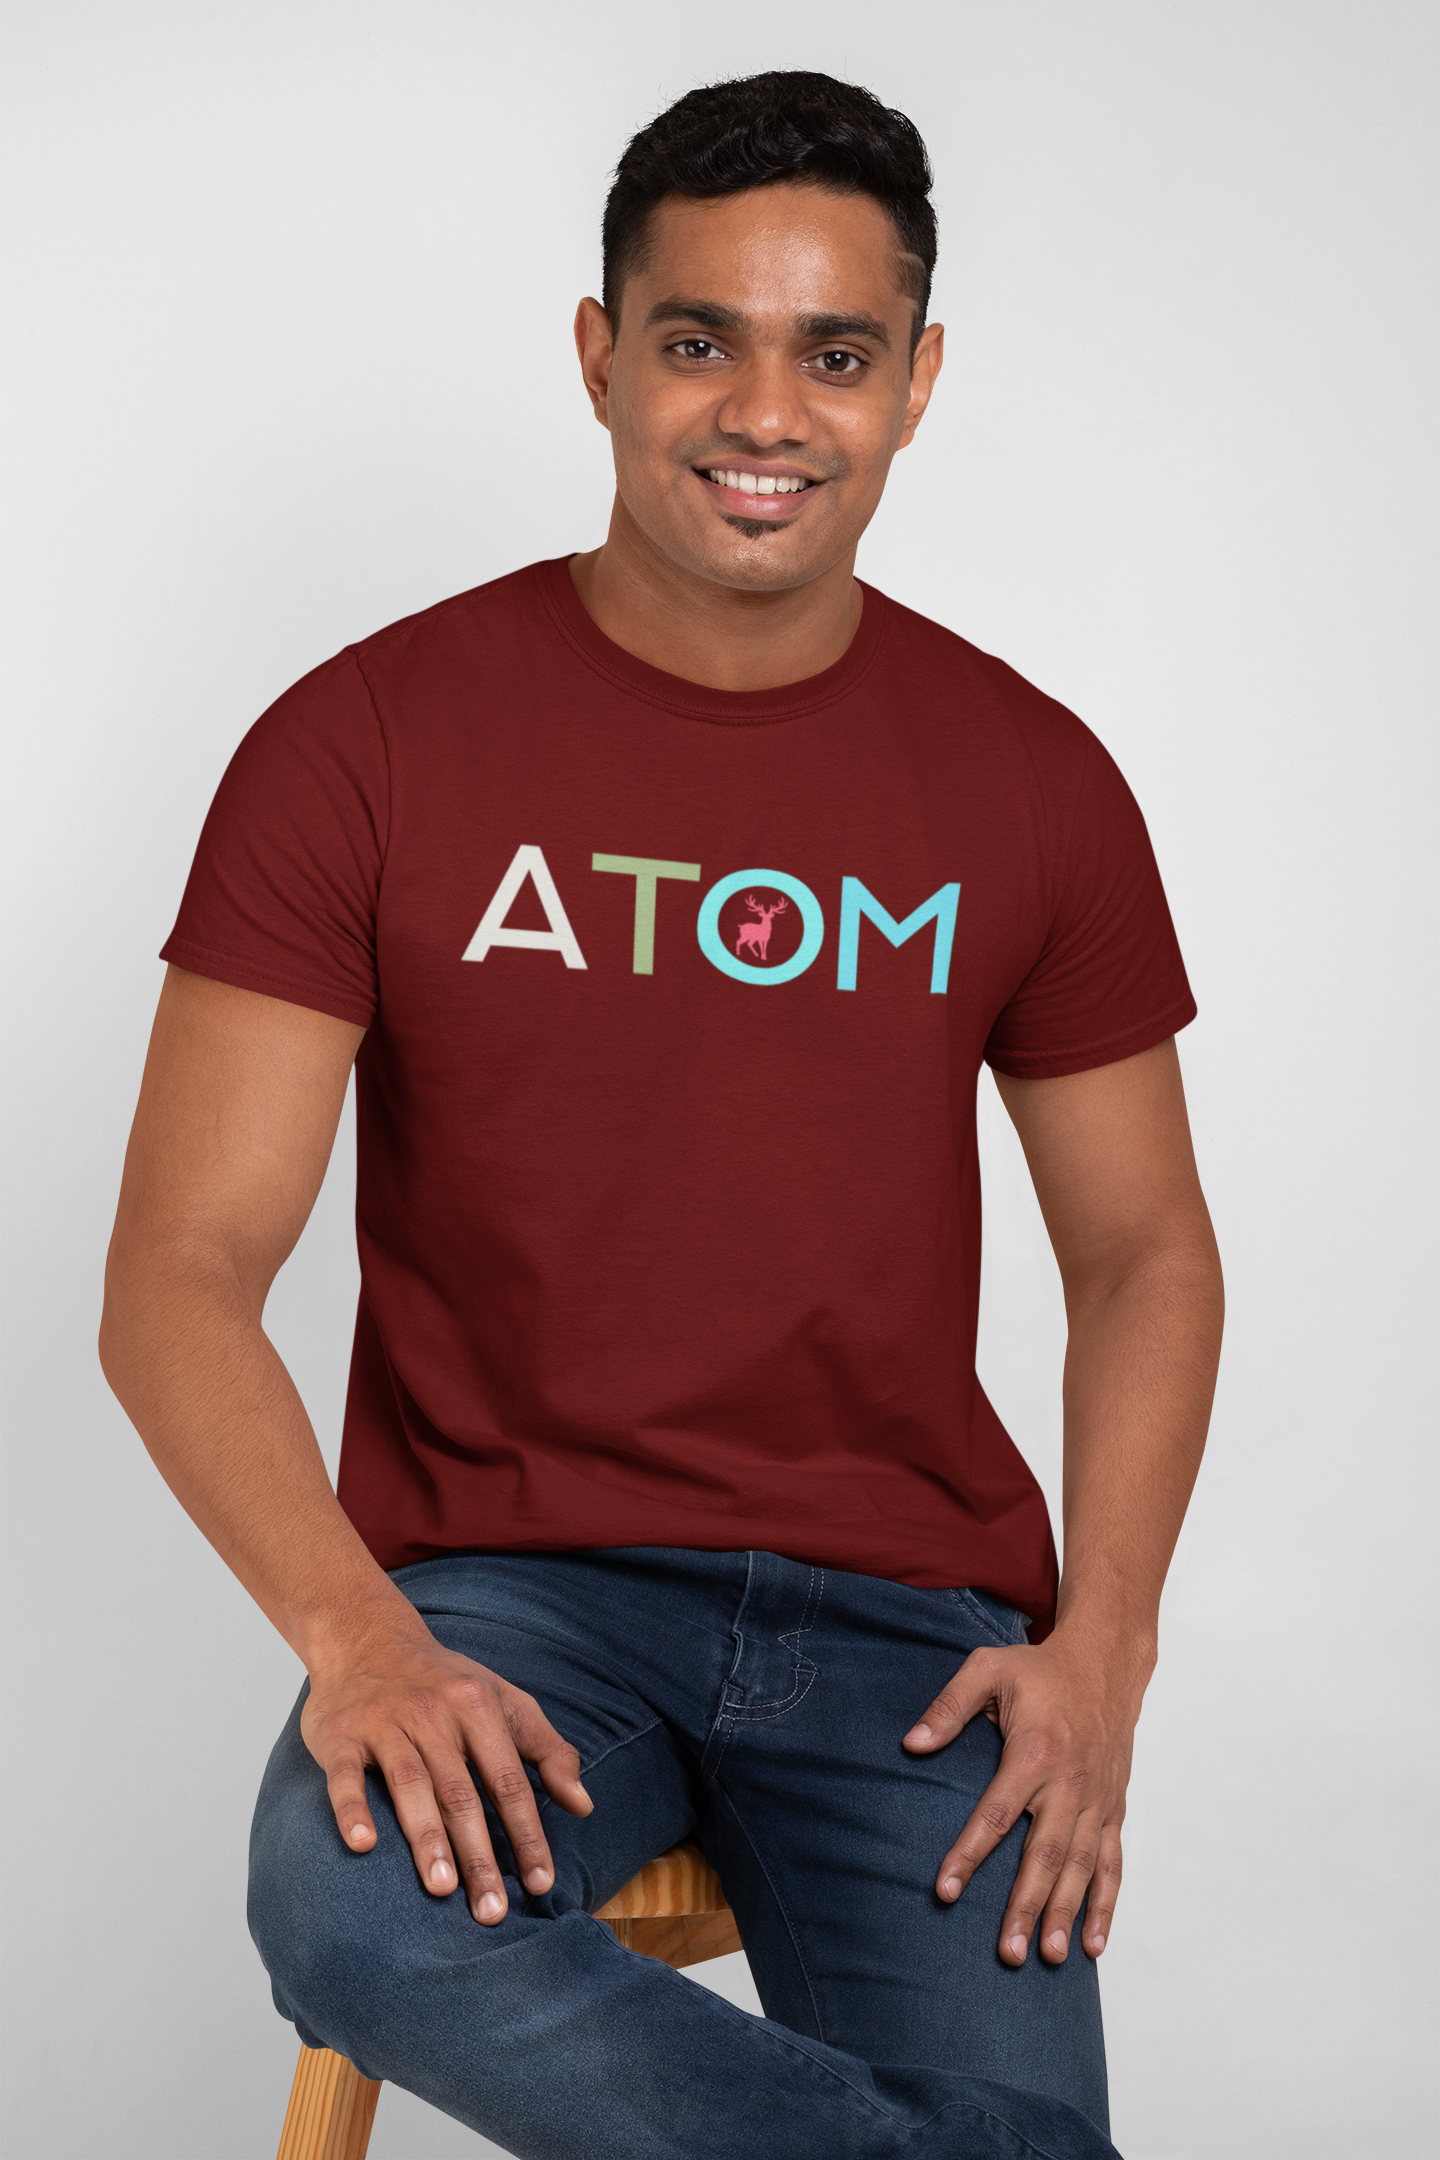 ATOM Signature Flat Blue Icon Maroon Round Neck T-Shirt for Men.